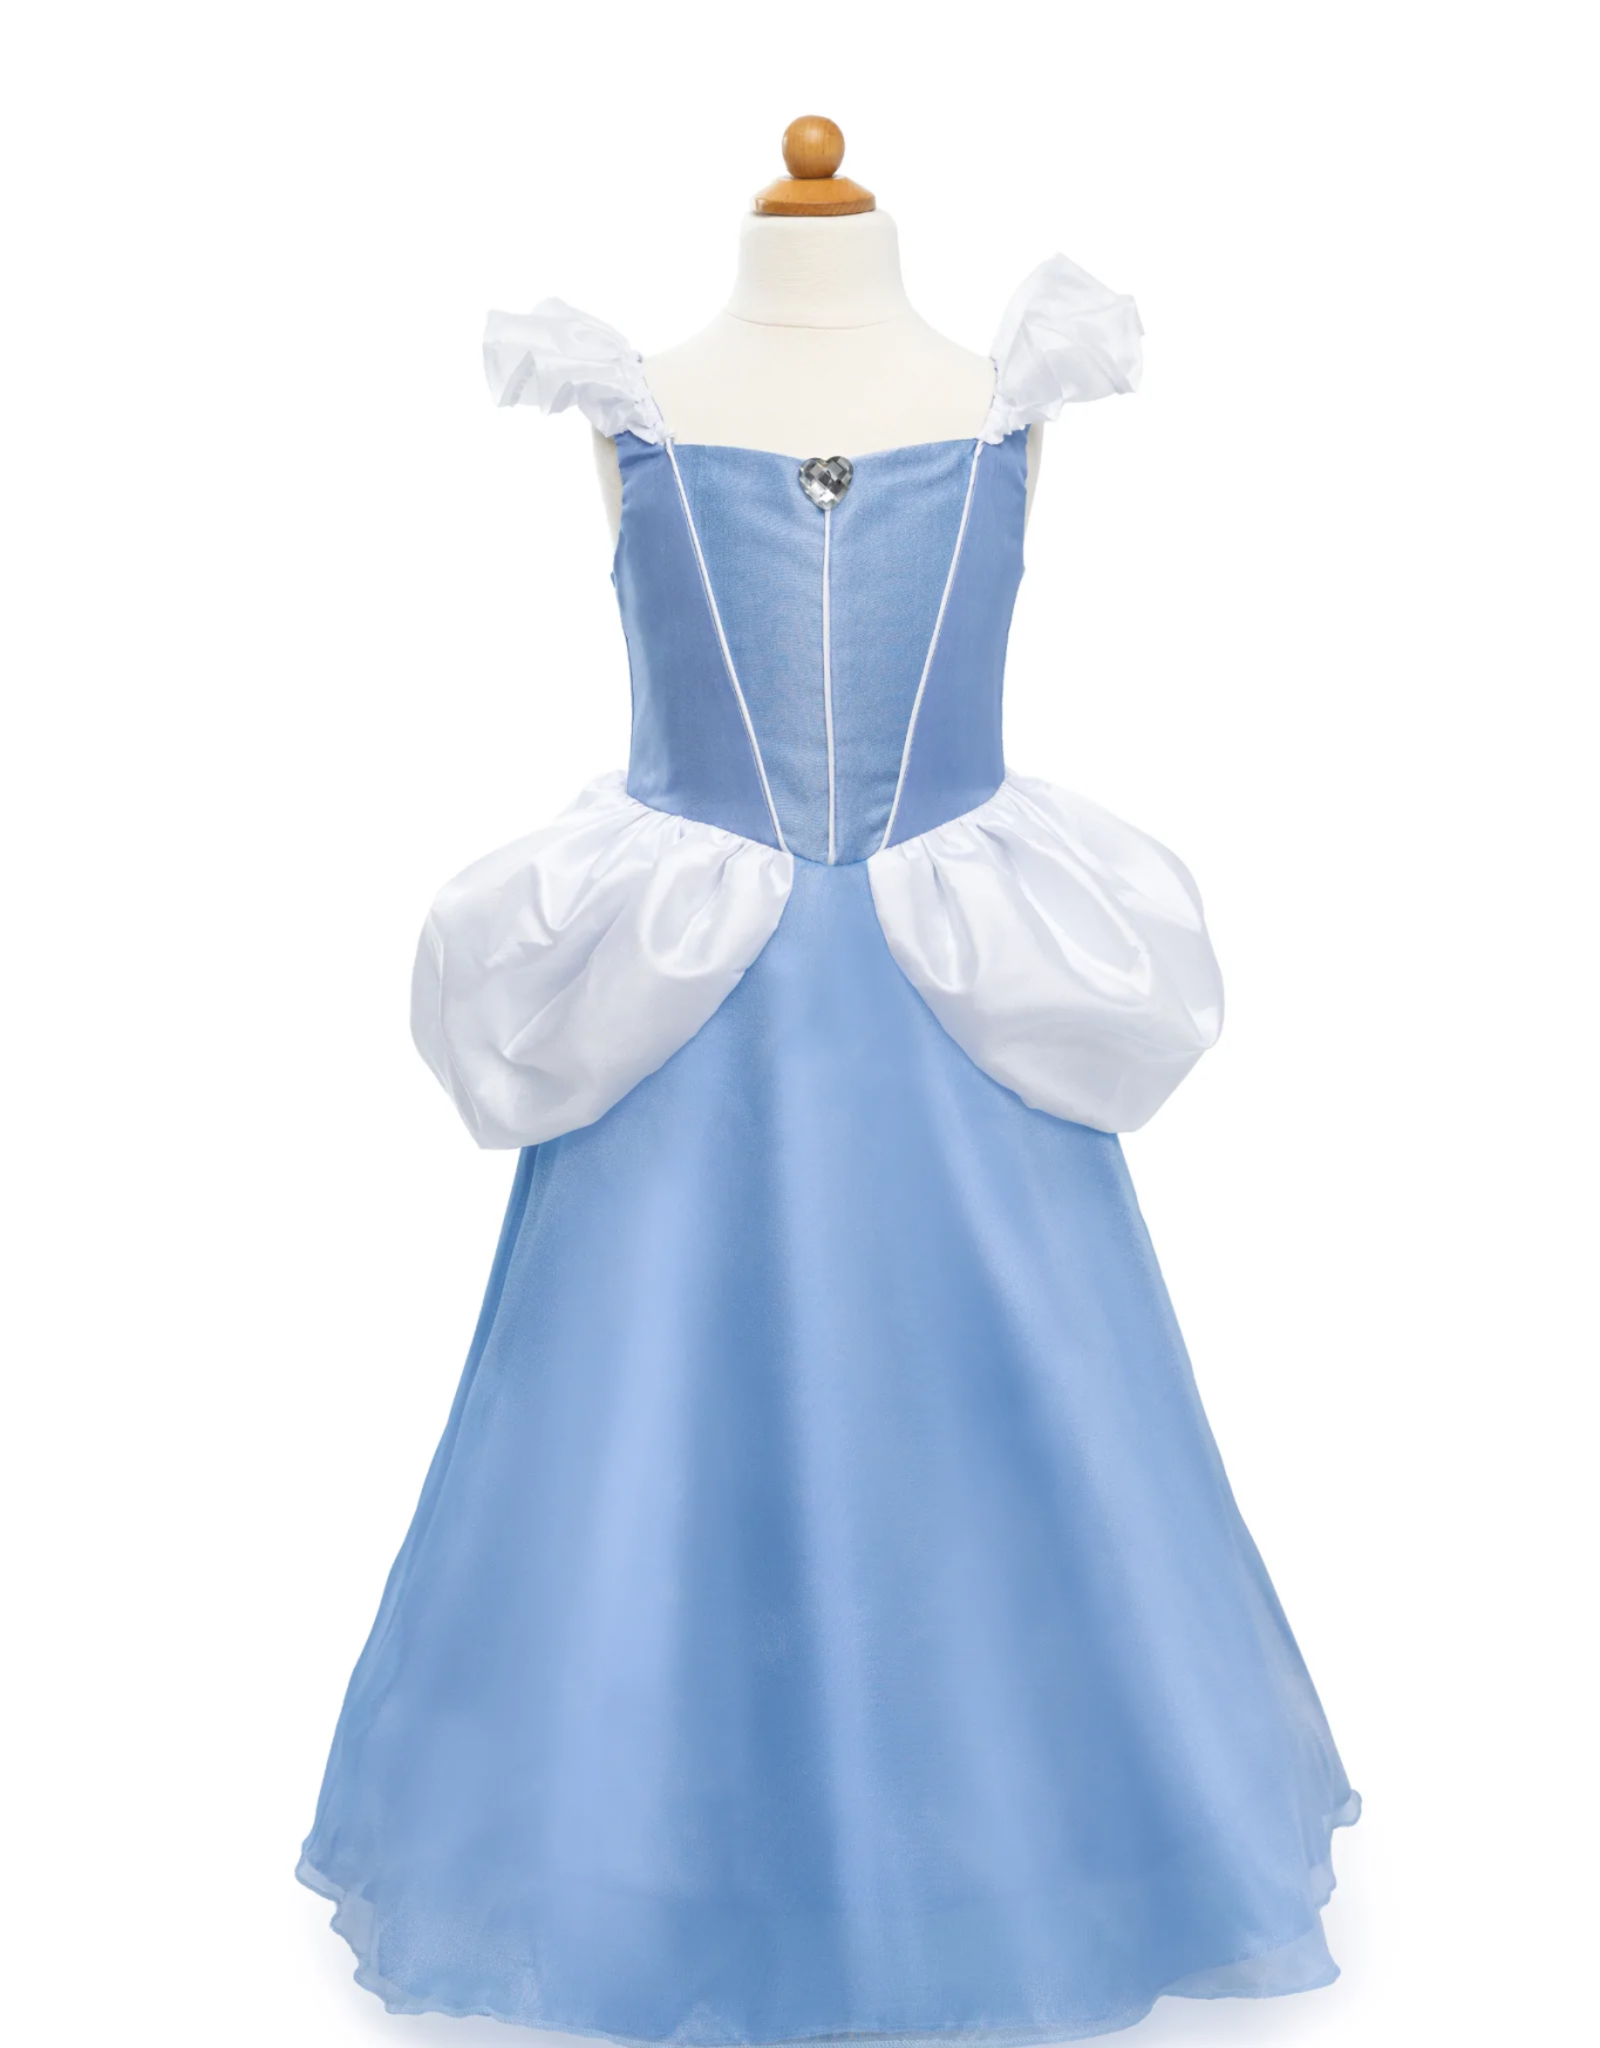 Great Pretenders Boutique Cinderella Gown, Size 3-4